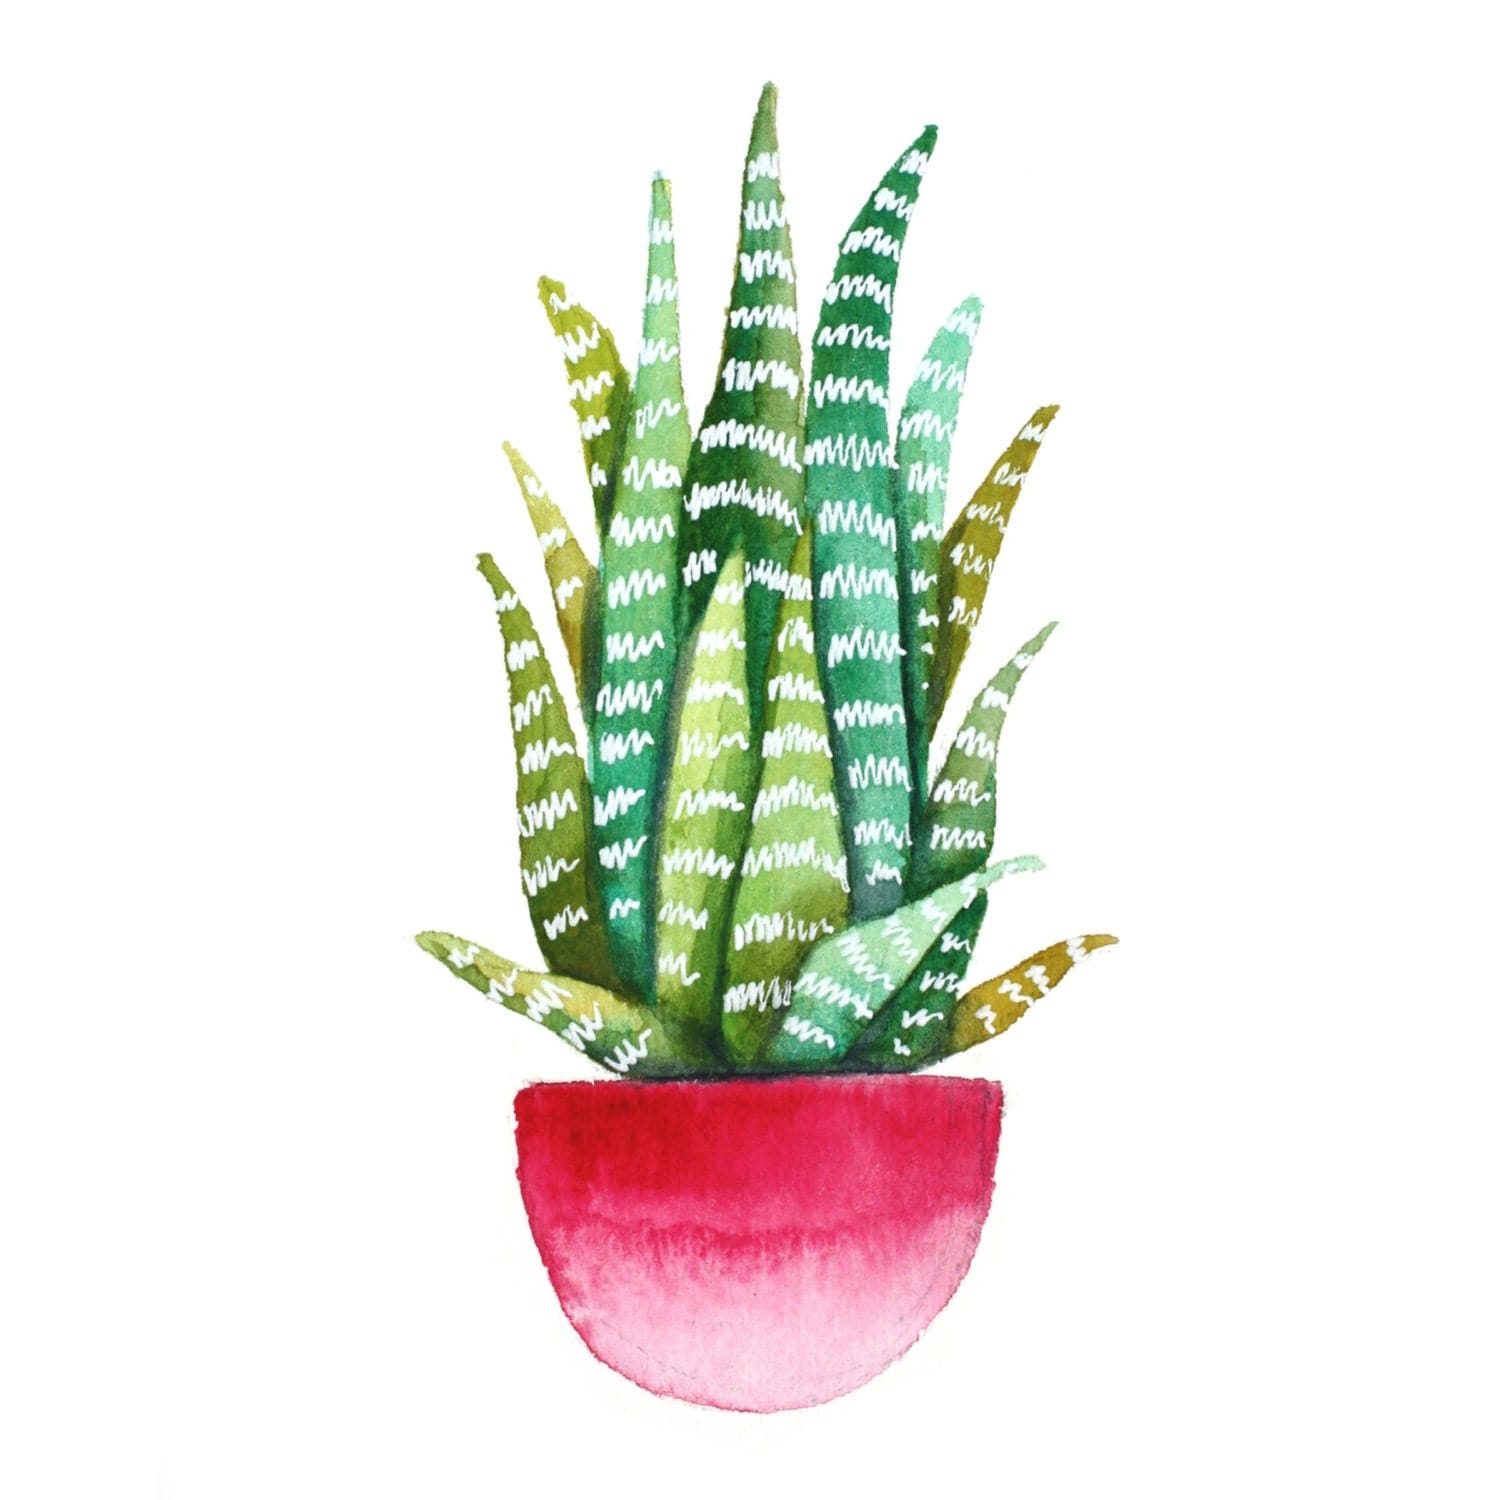 Print of original watercolor painting of a cactus succulent.